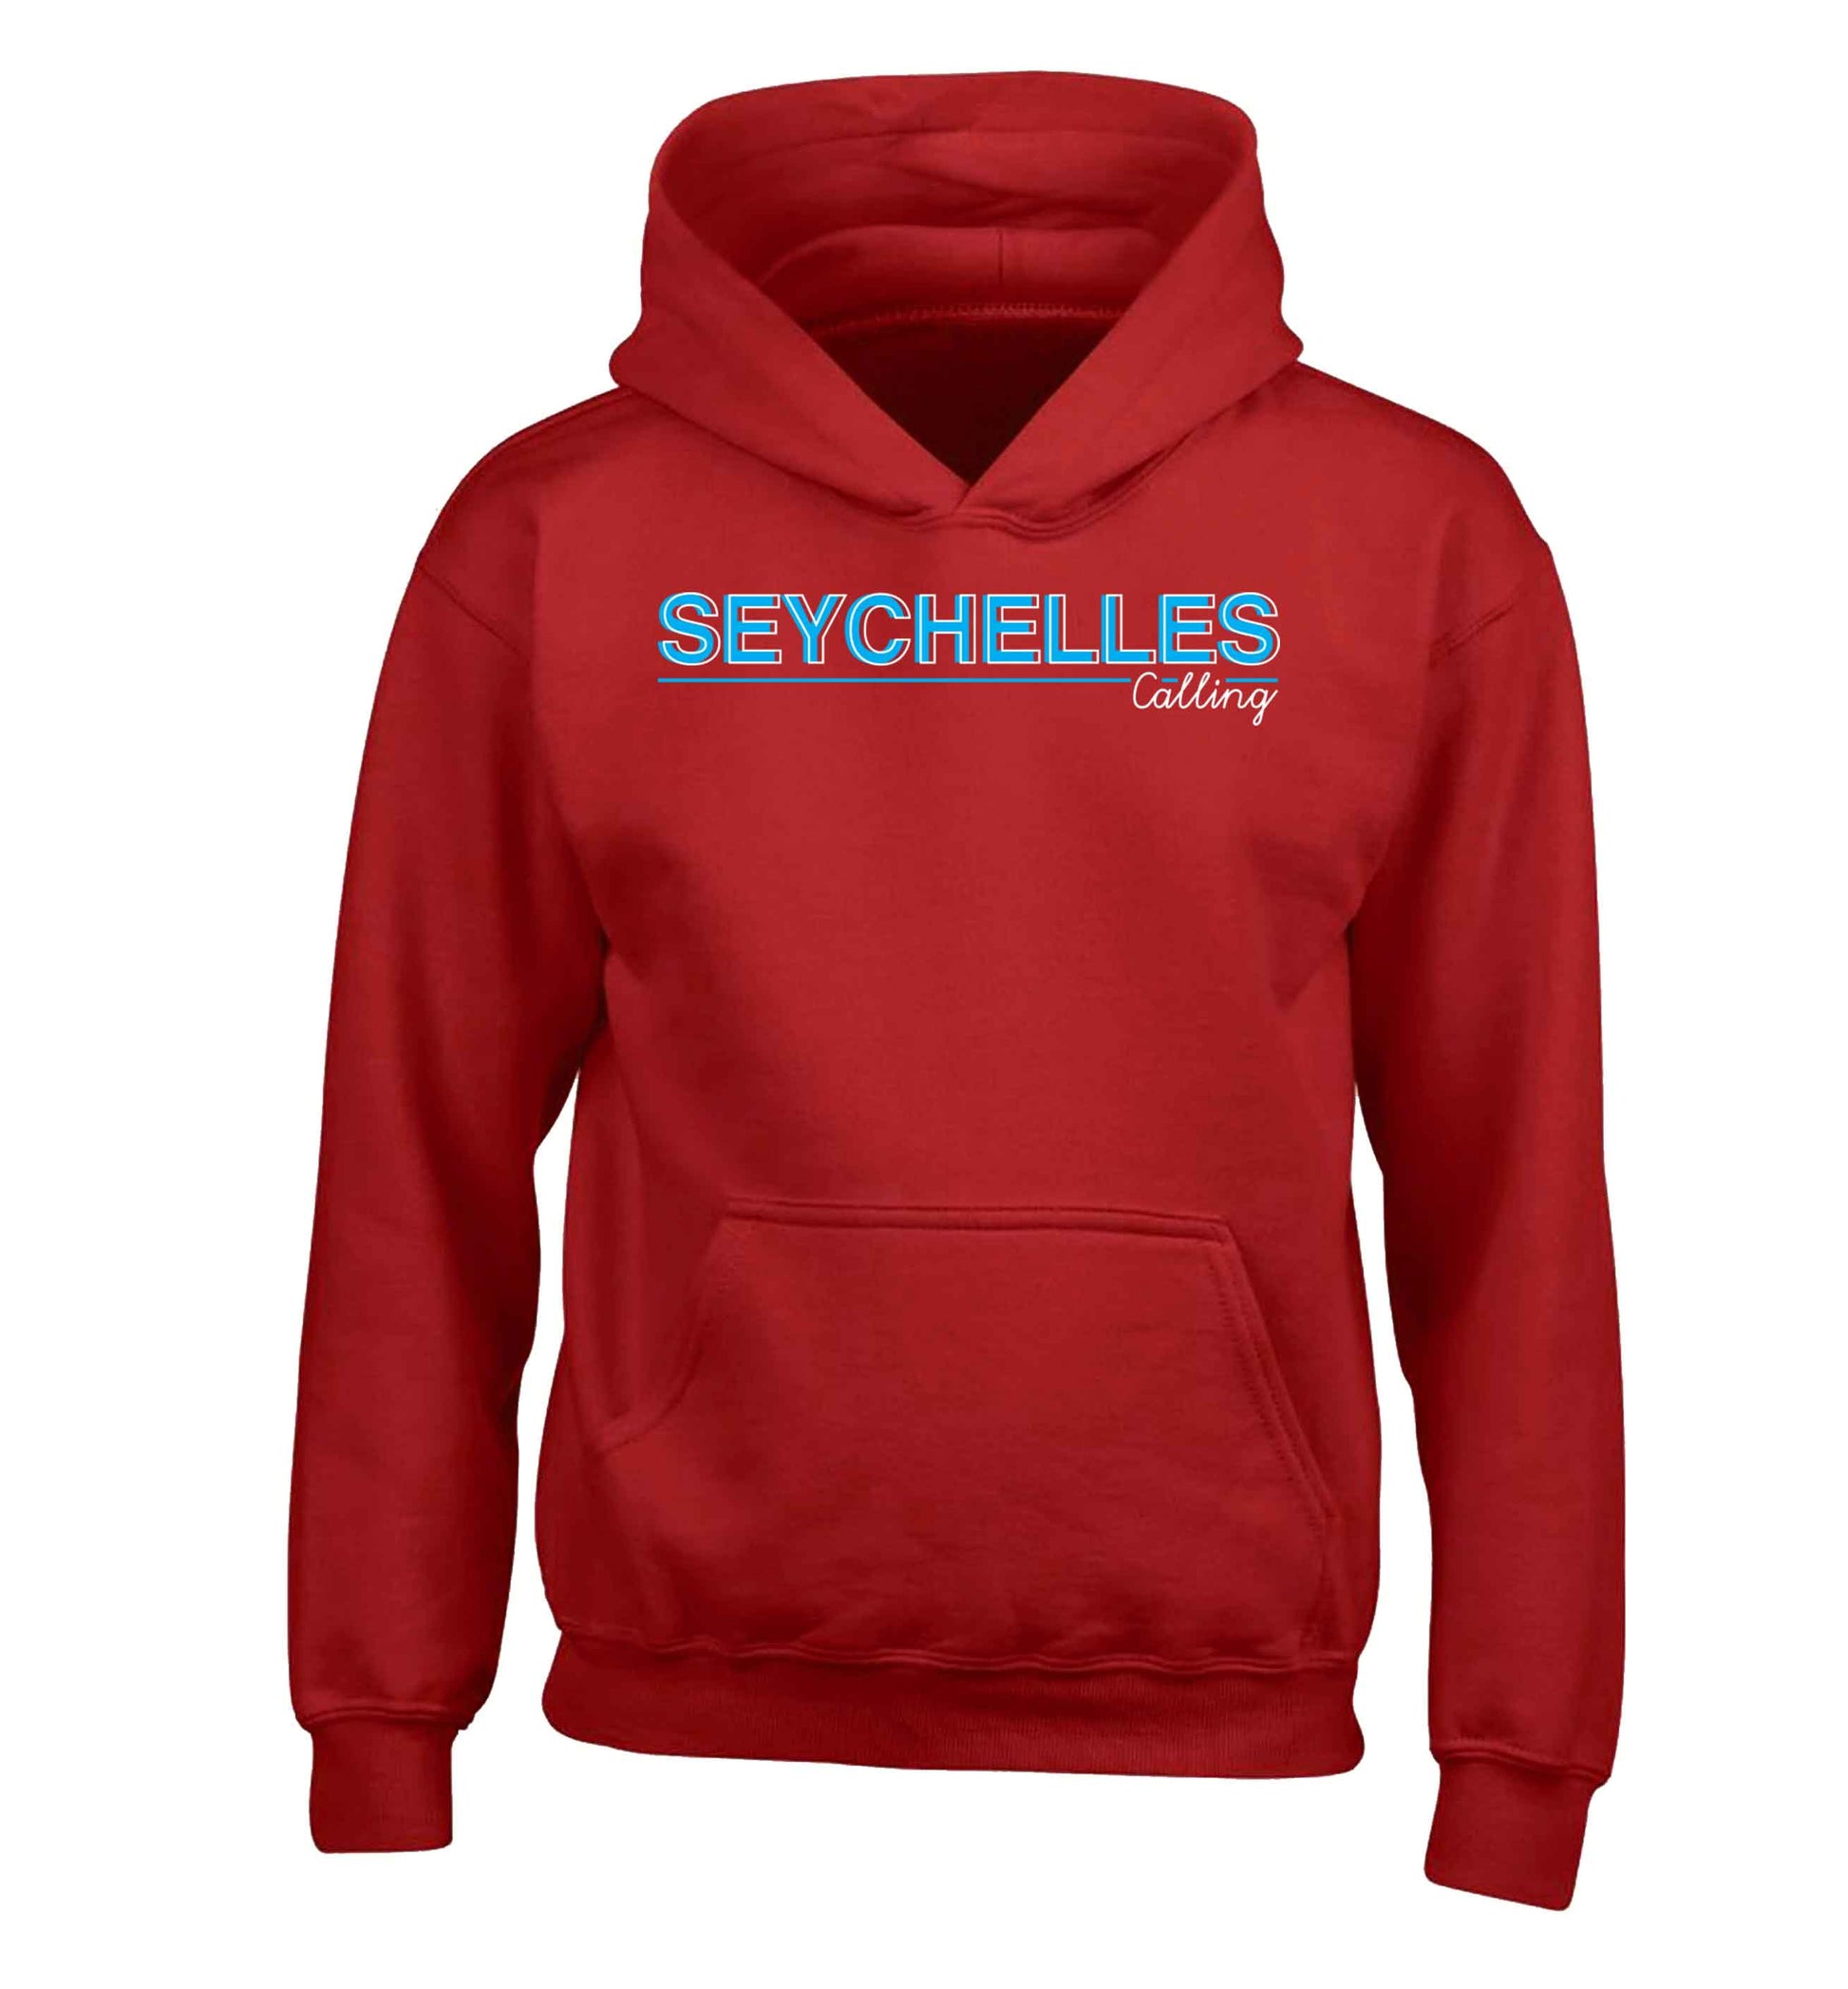 Seychelles calling children's red hoodie 12-13 Years